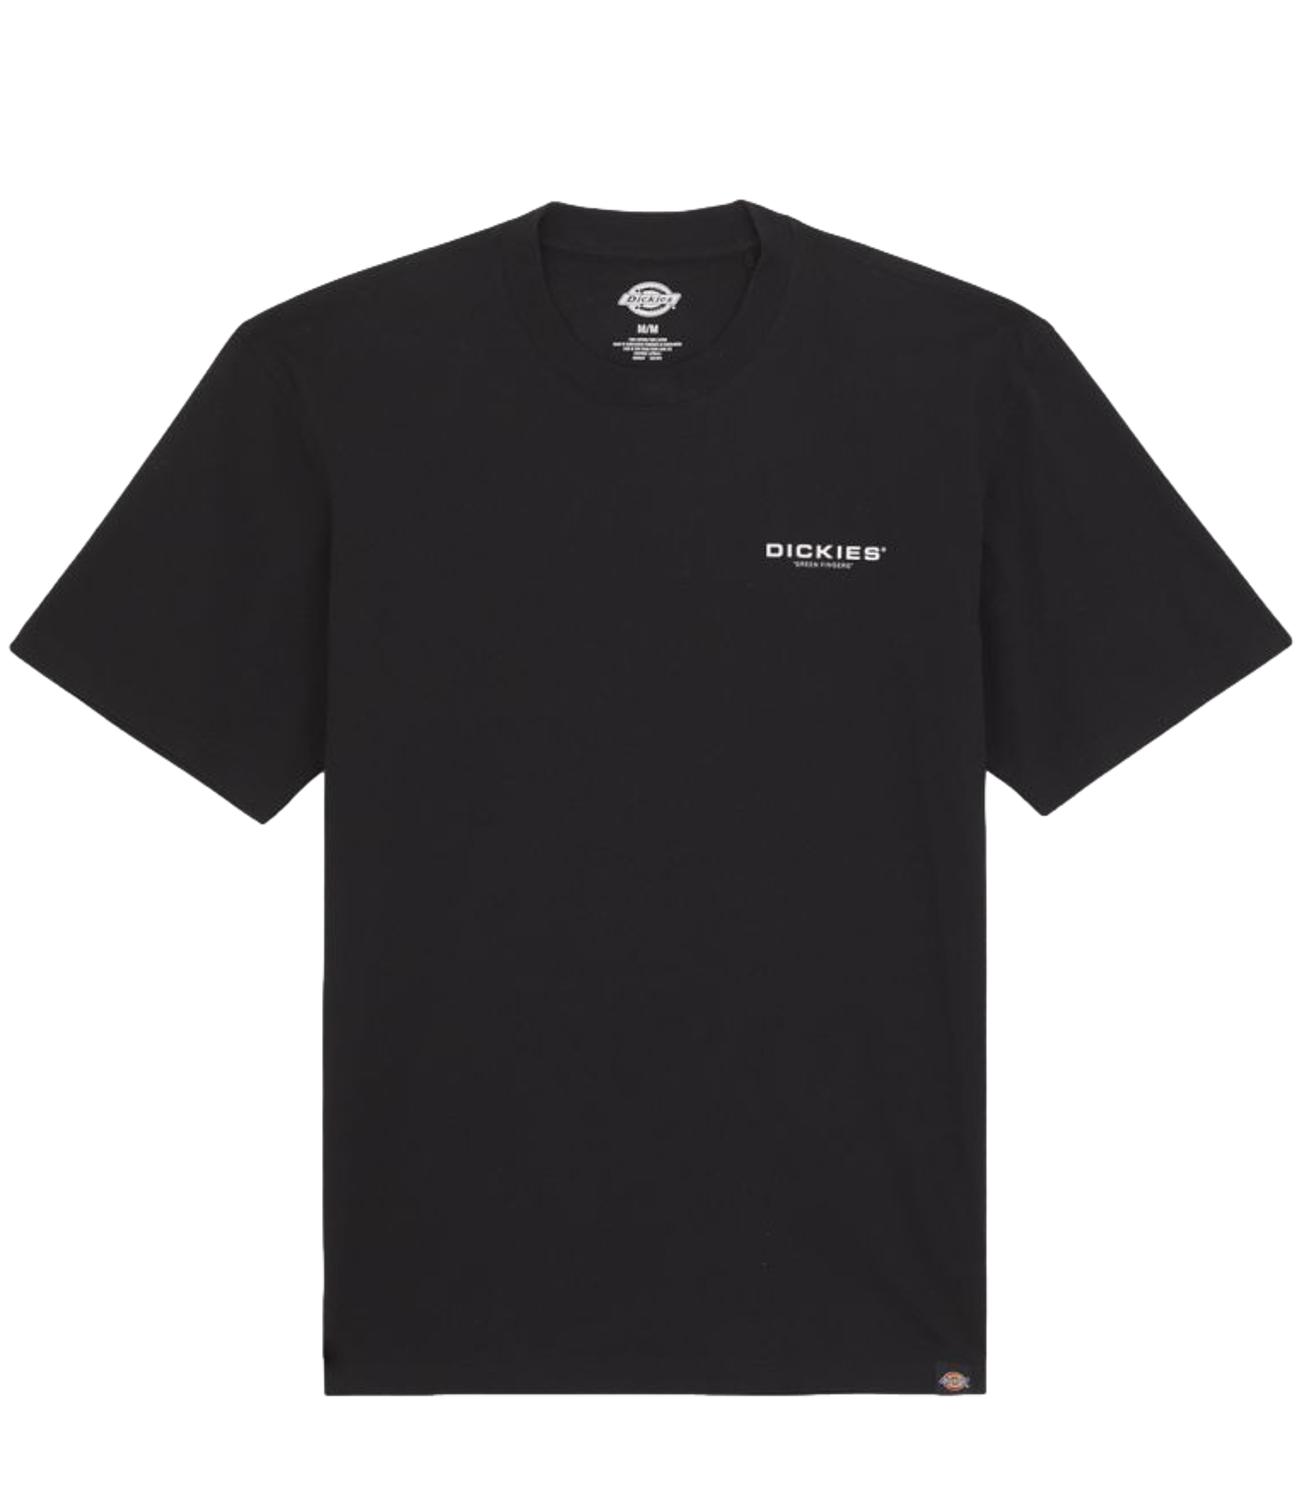 T-shirt Dickies nera con logo Wakefield